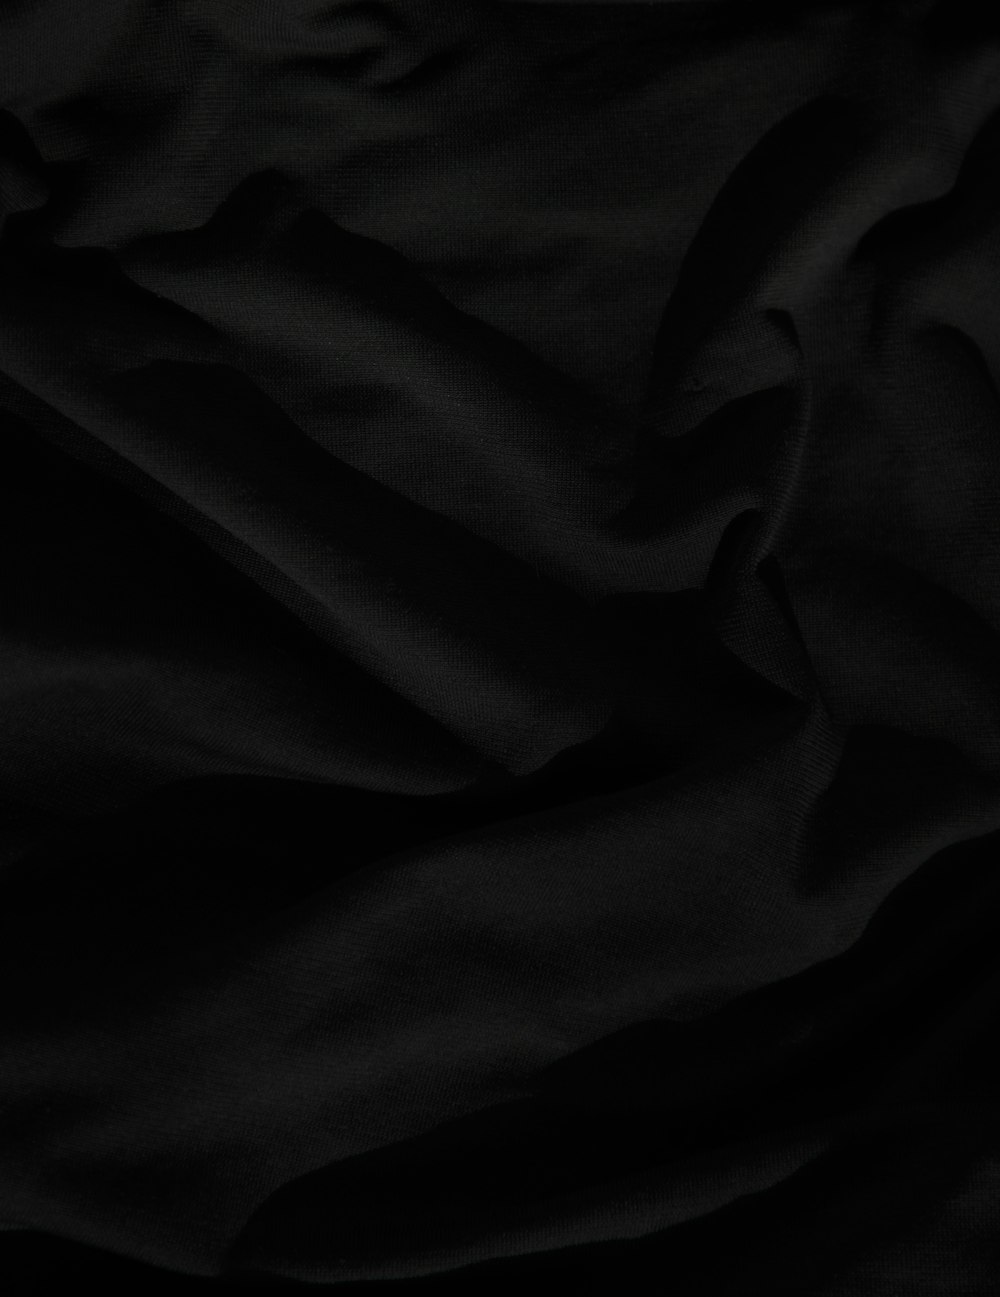 black textile on white textile photo – Free Black Image on Unsplash